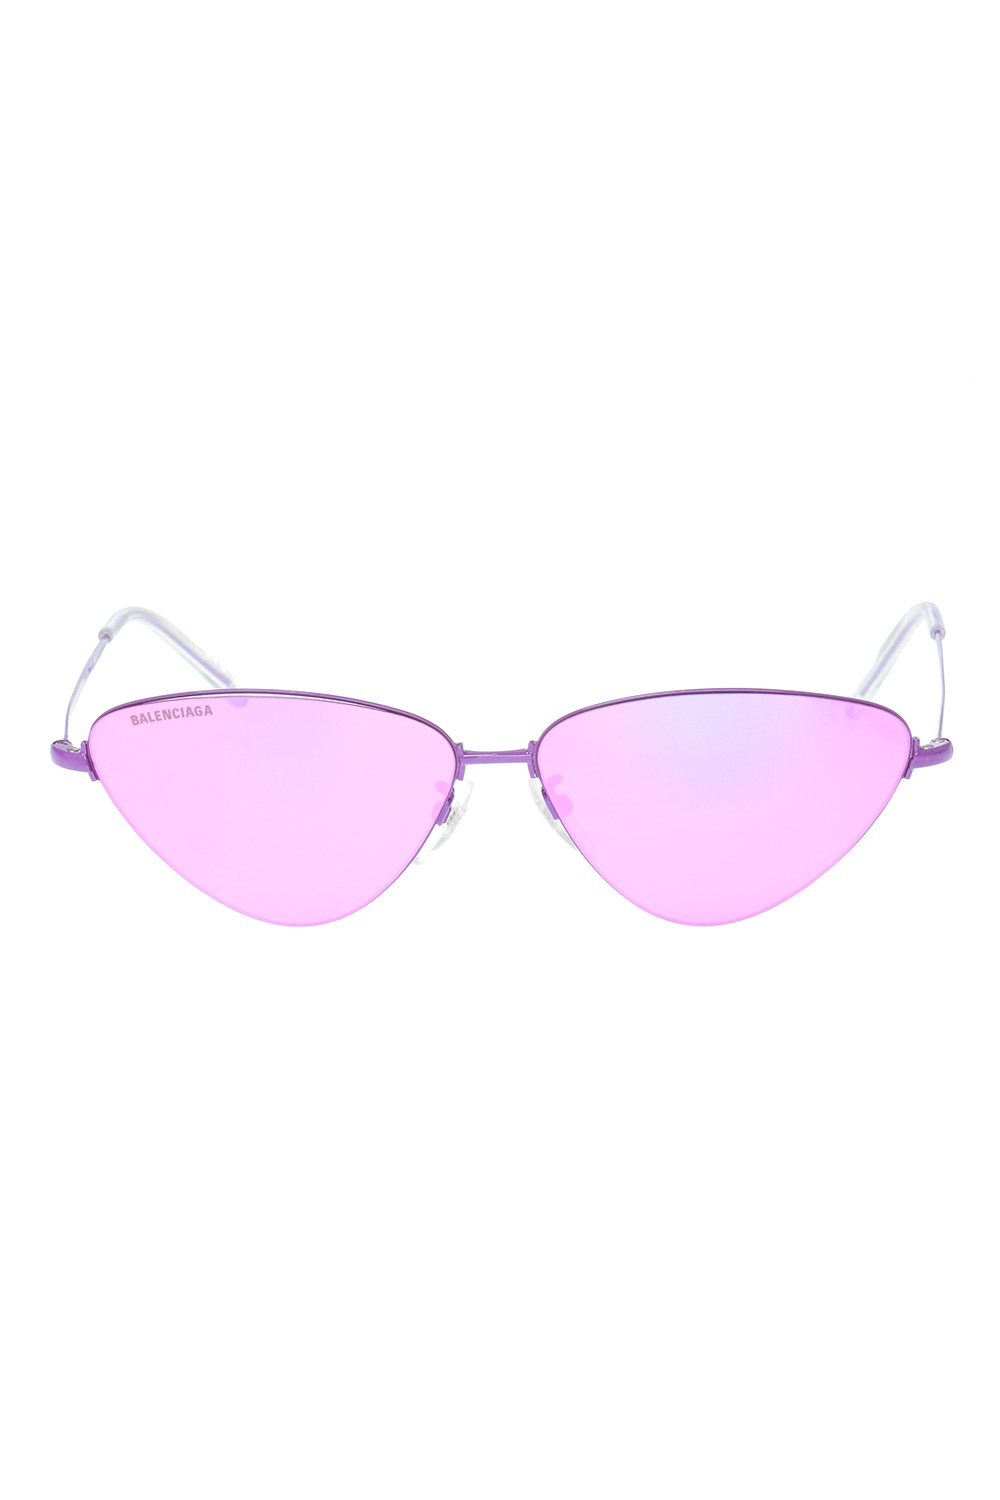 Balenciaga Branded sunglasses